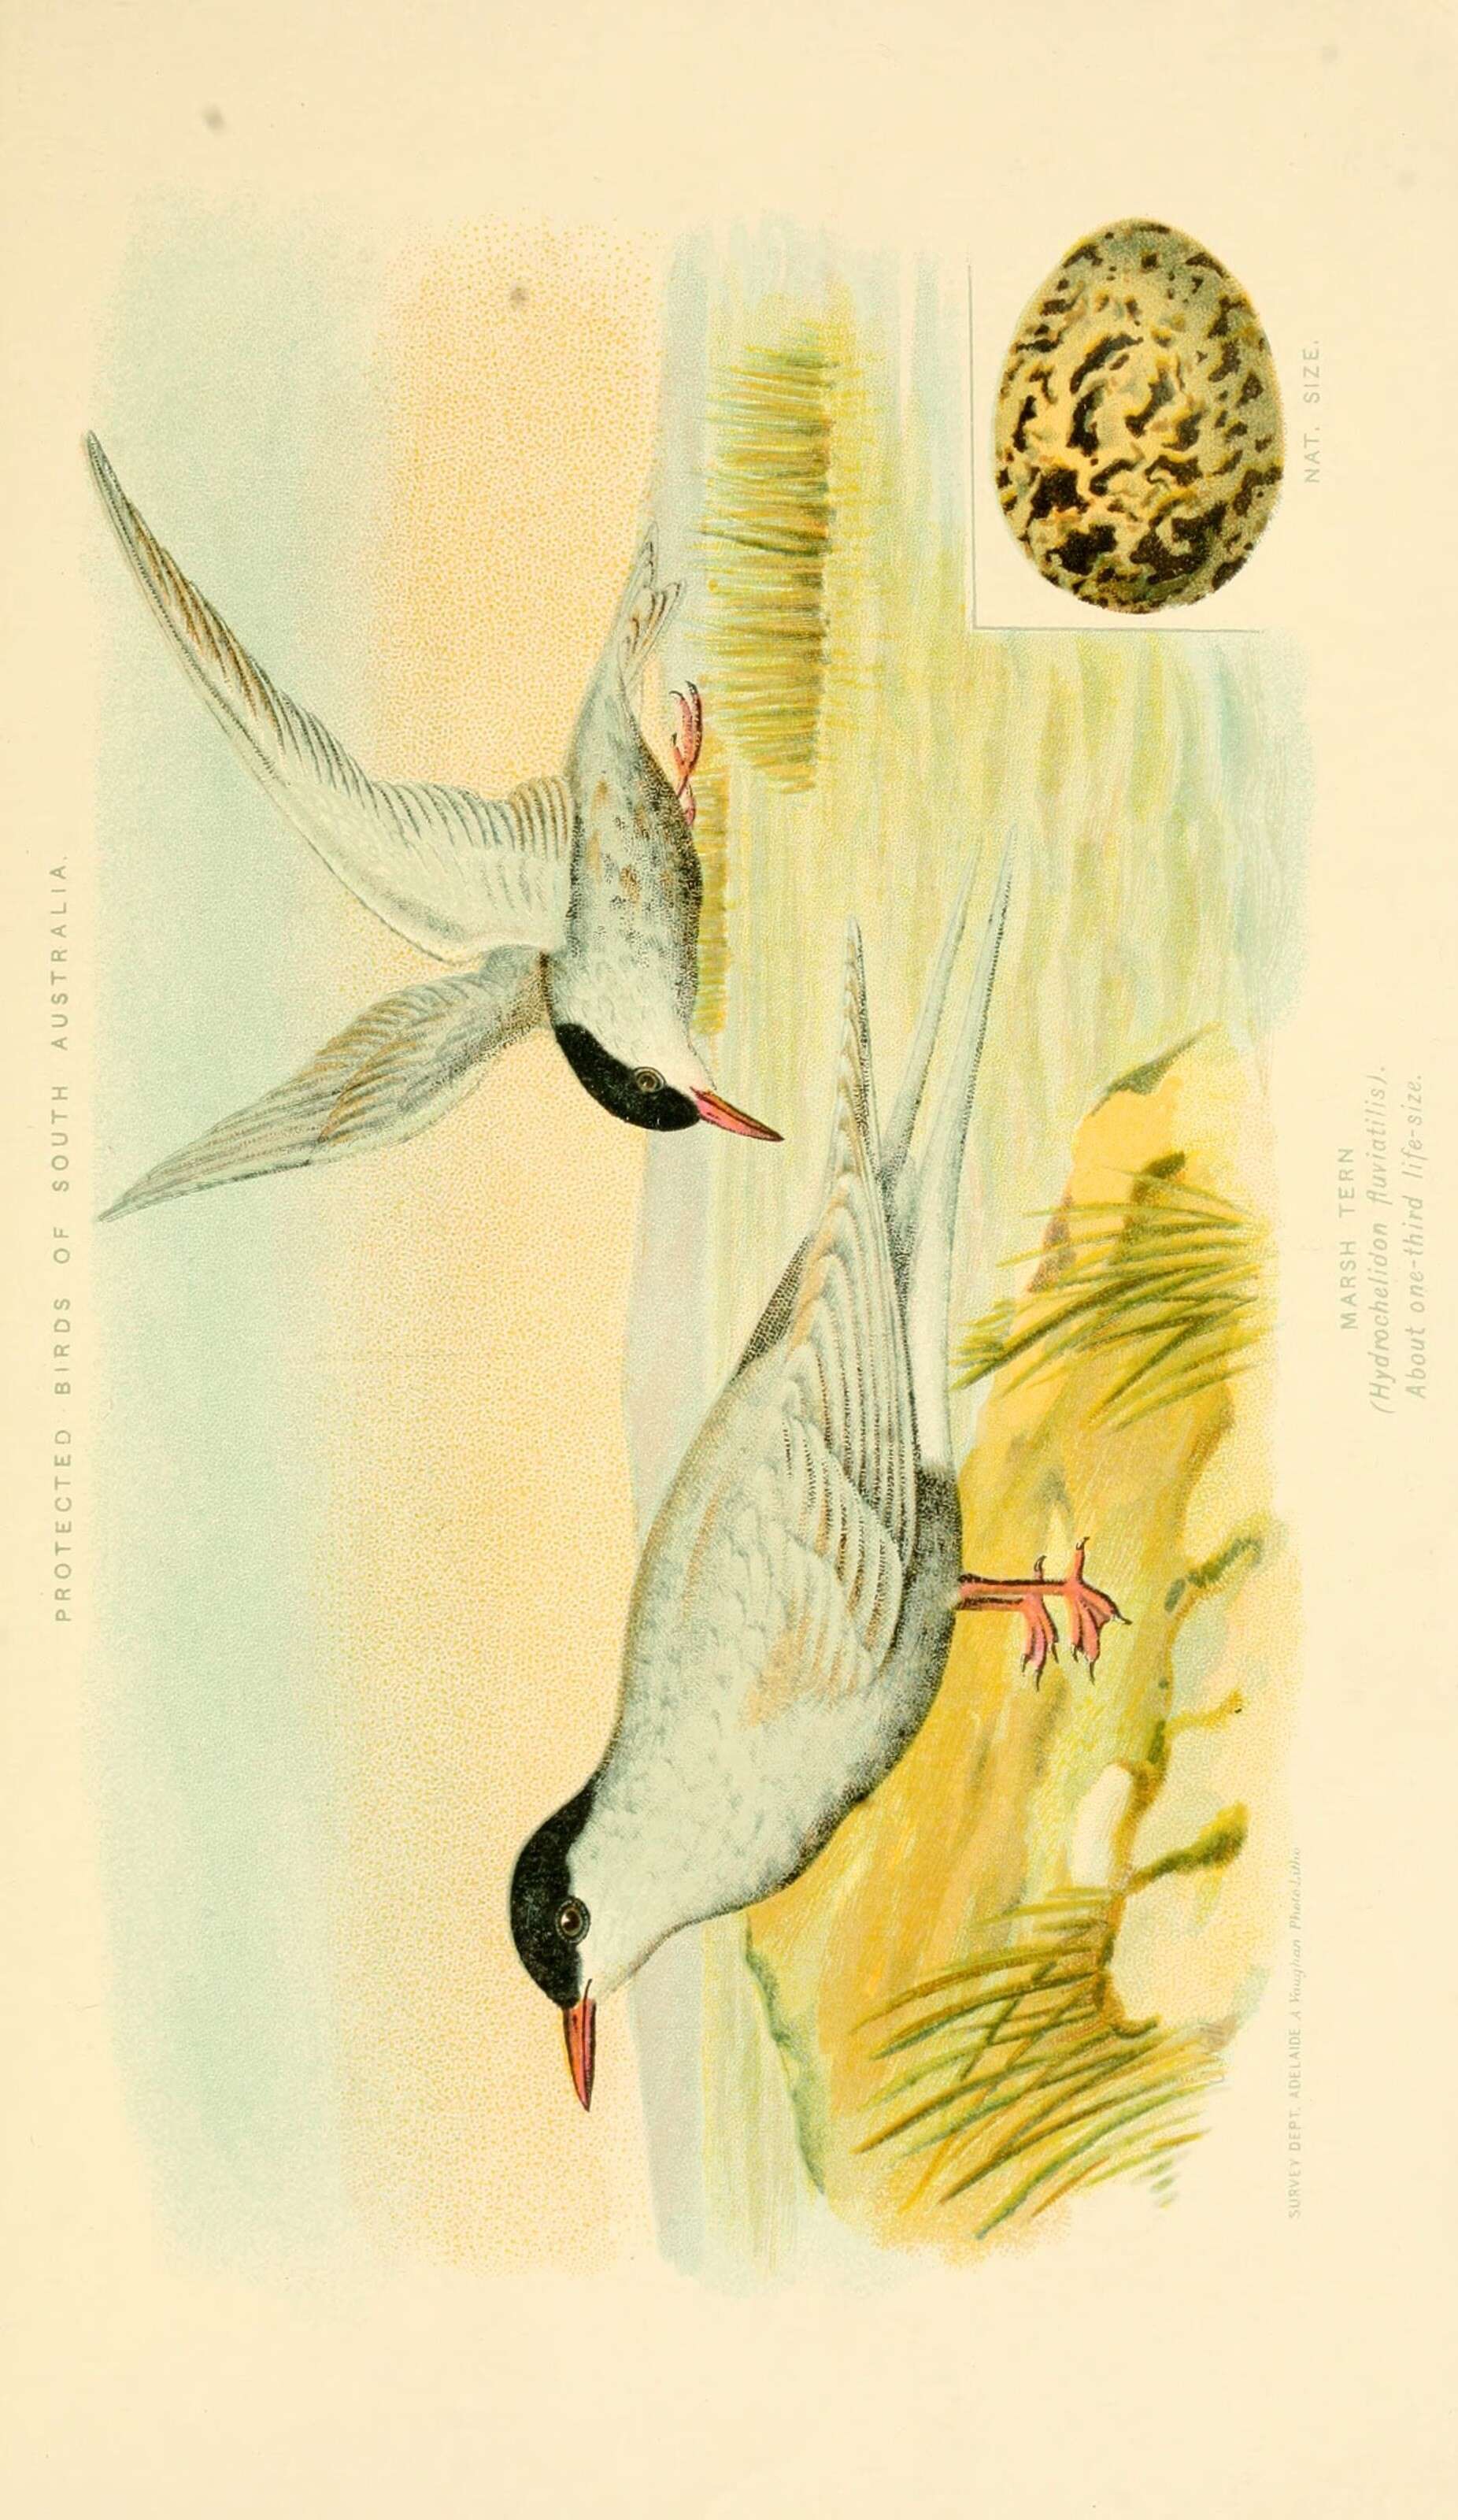 Plancia ëd Chlidonias albostriatus (Gray & GR 1845)